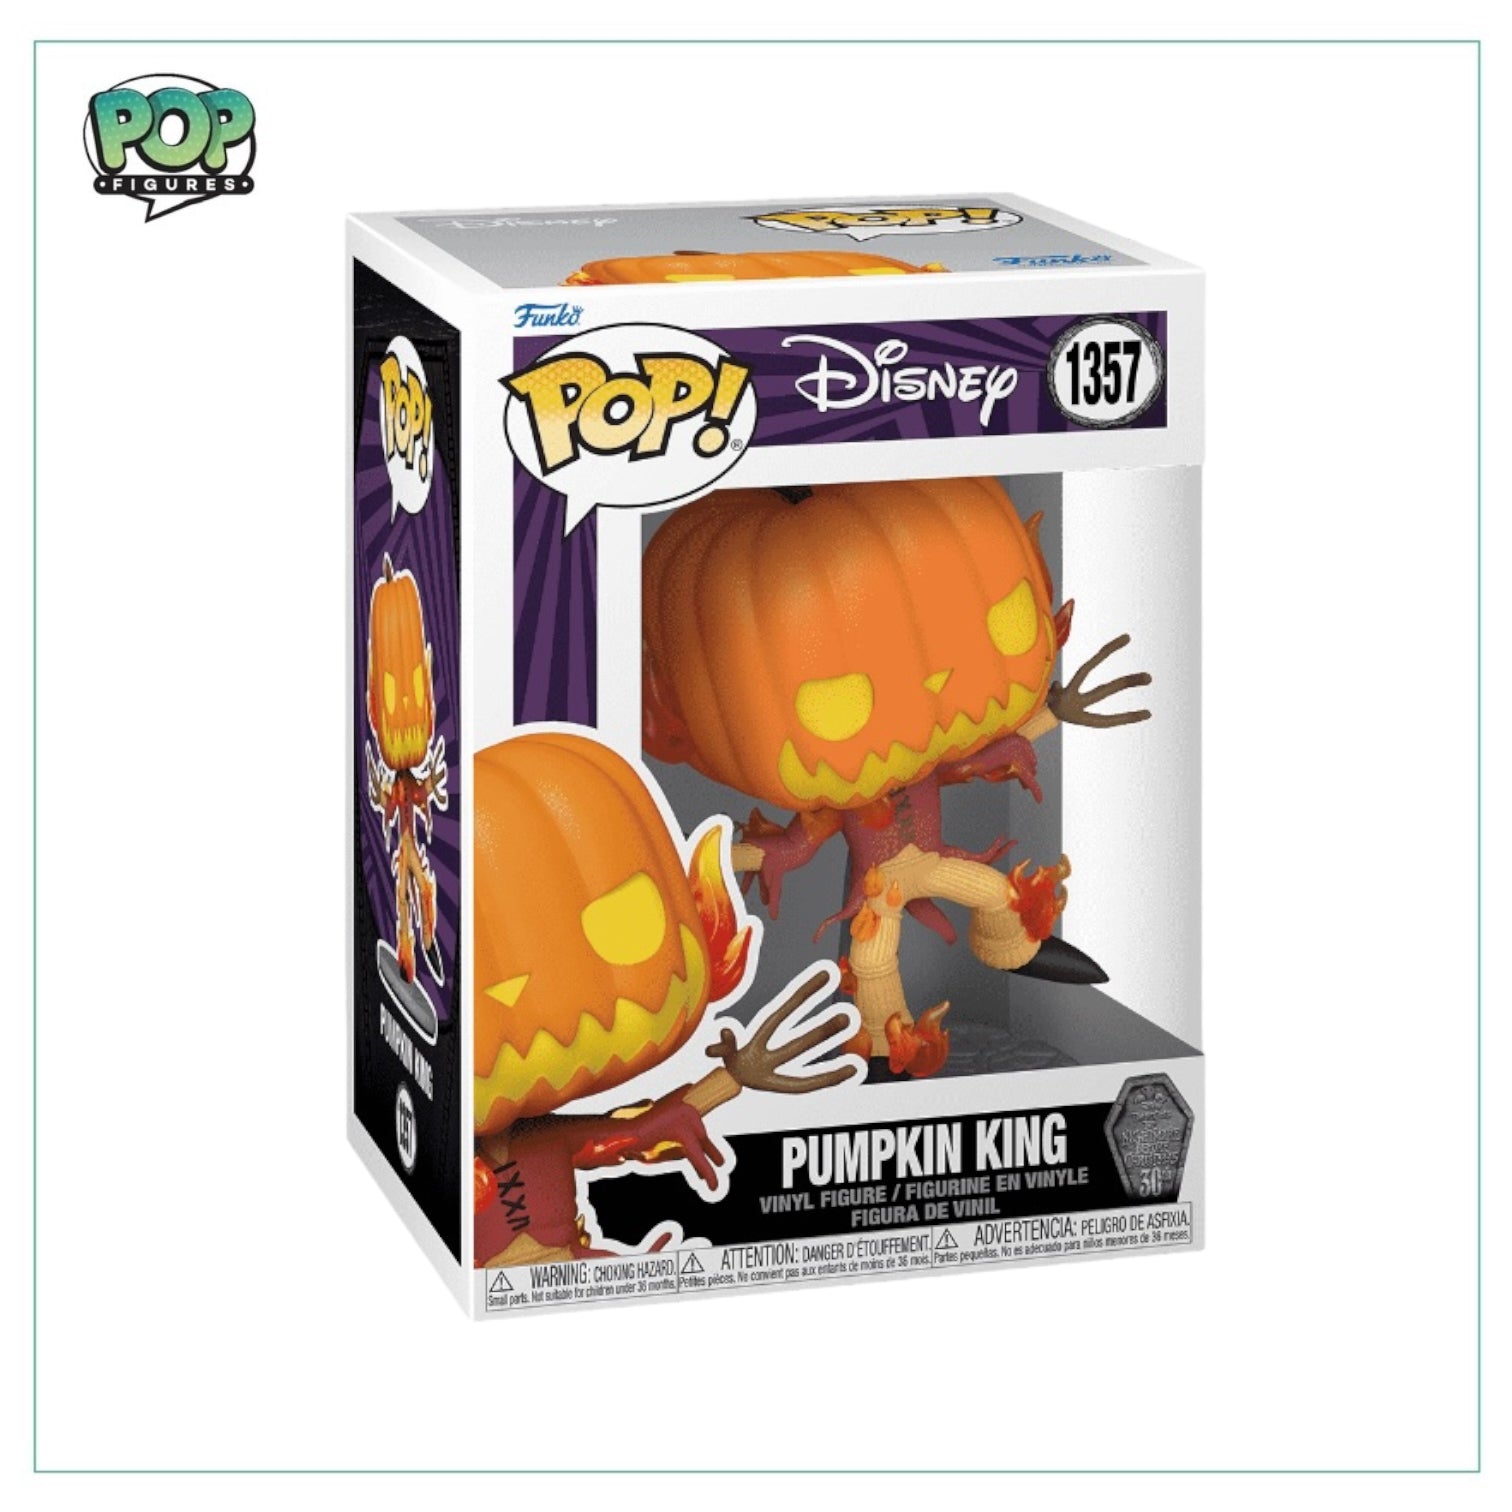 Pumpkin King #1357 Funko Pop! - The Nightmare Before Christmas